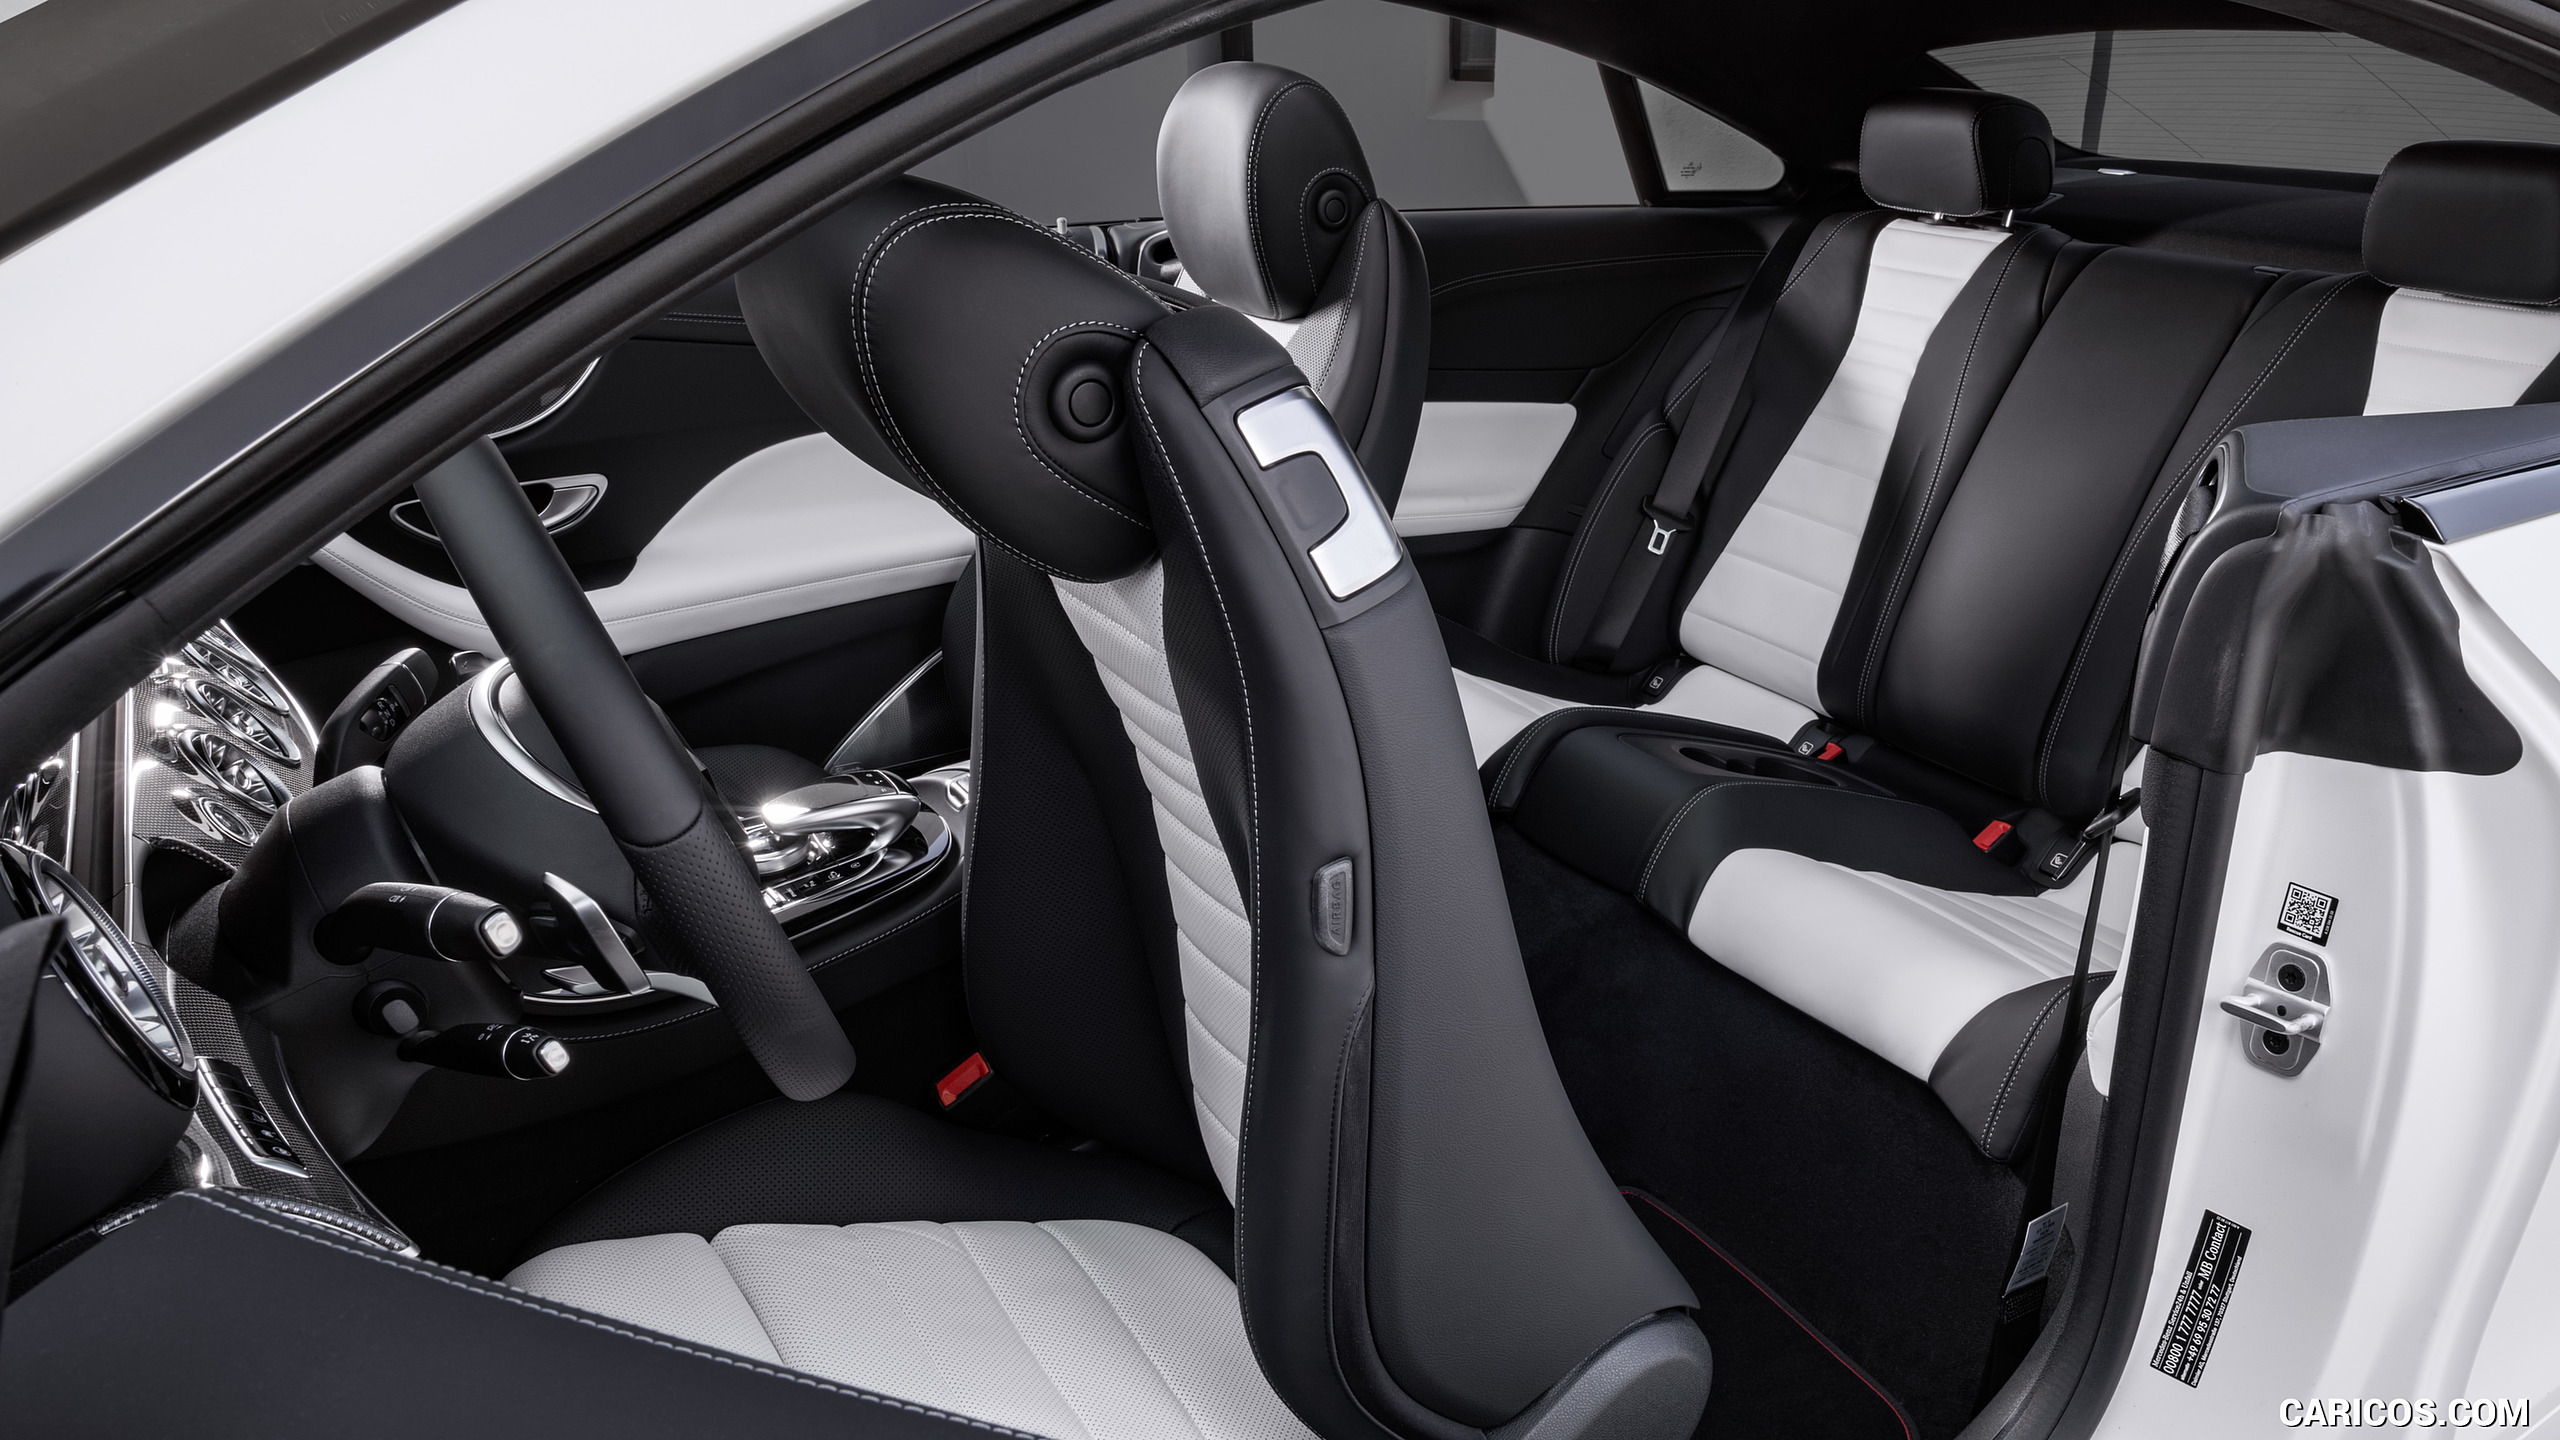 2018 Mercedes-Benz E-Class Coupe - Nappa White / Black Leather Interior, Seats, #52 of 365